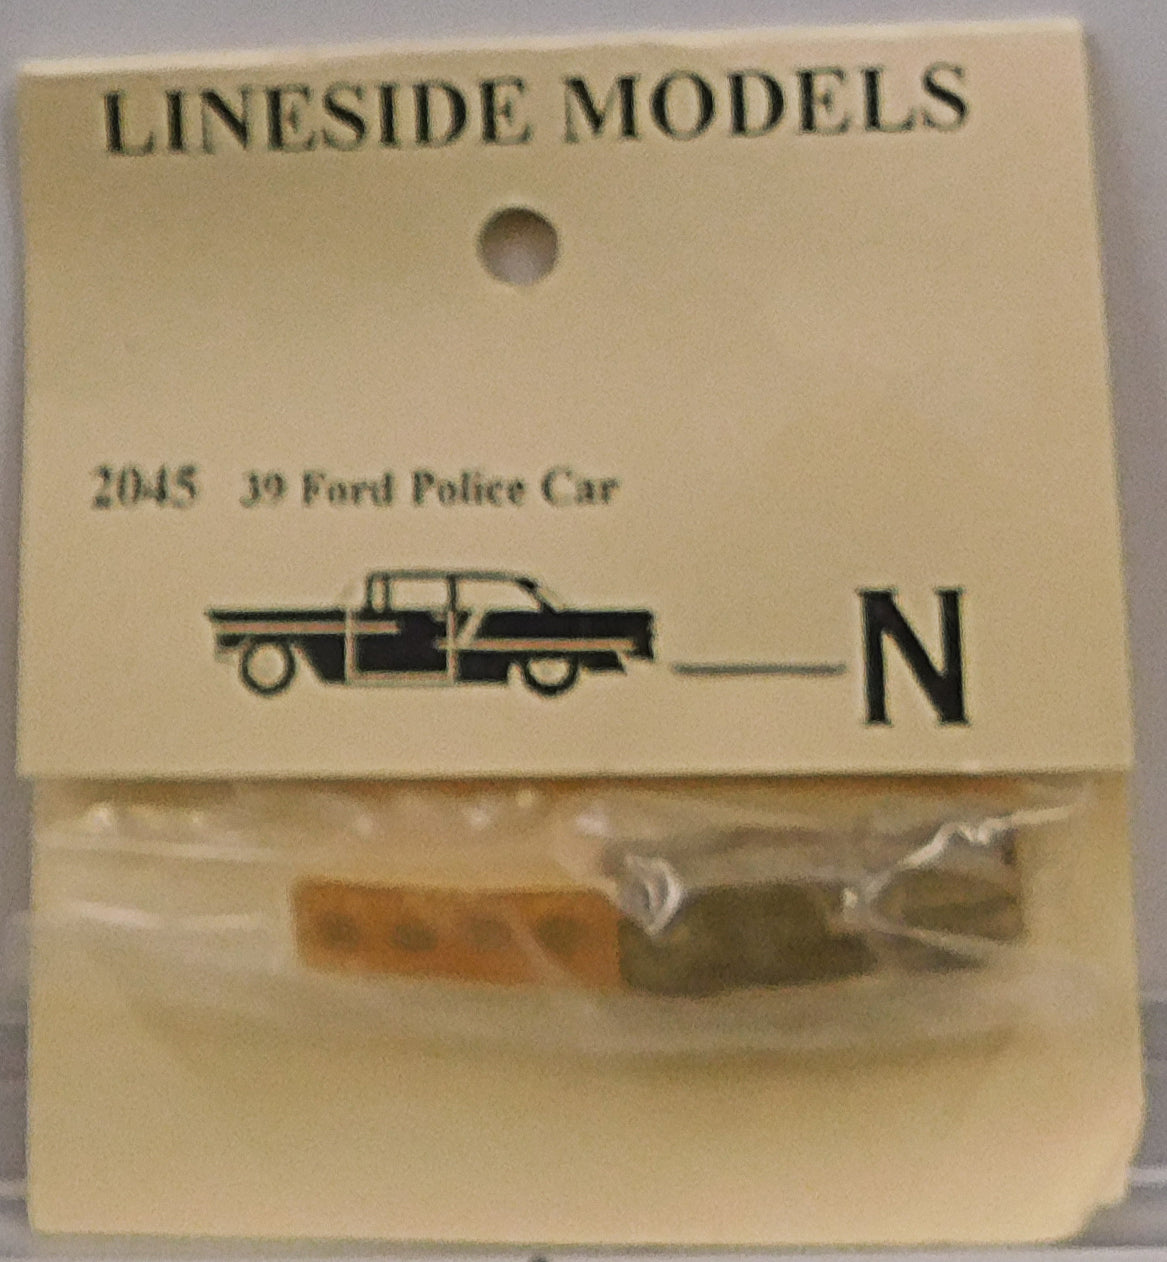 Lineside Models 2045 N 1939 Ford Police Car